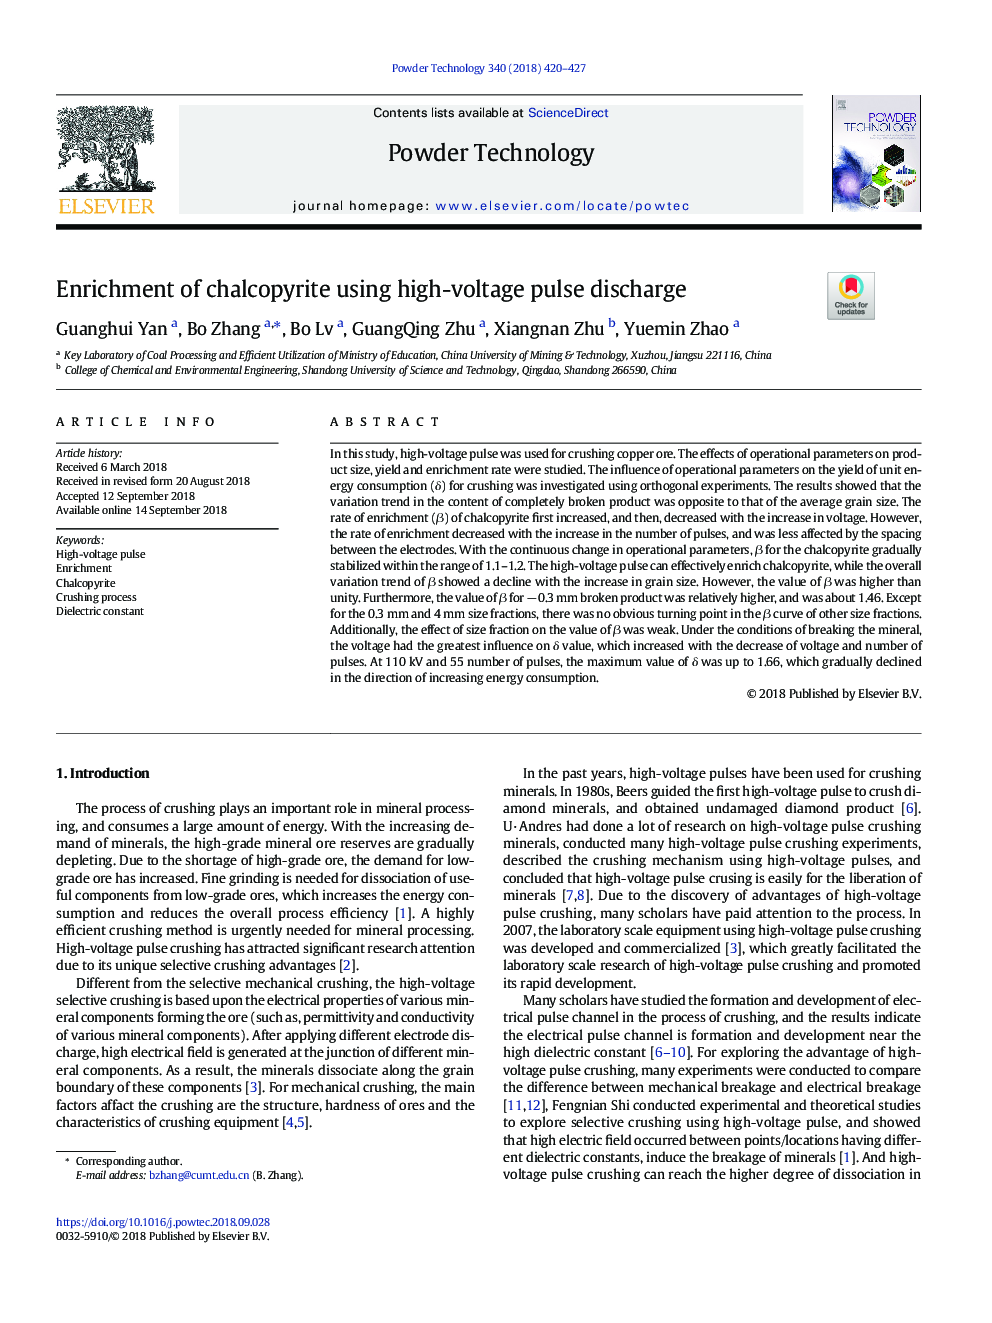 Enrichment of chalcopyrite using high-voltage pulse discharge